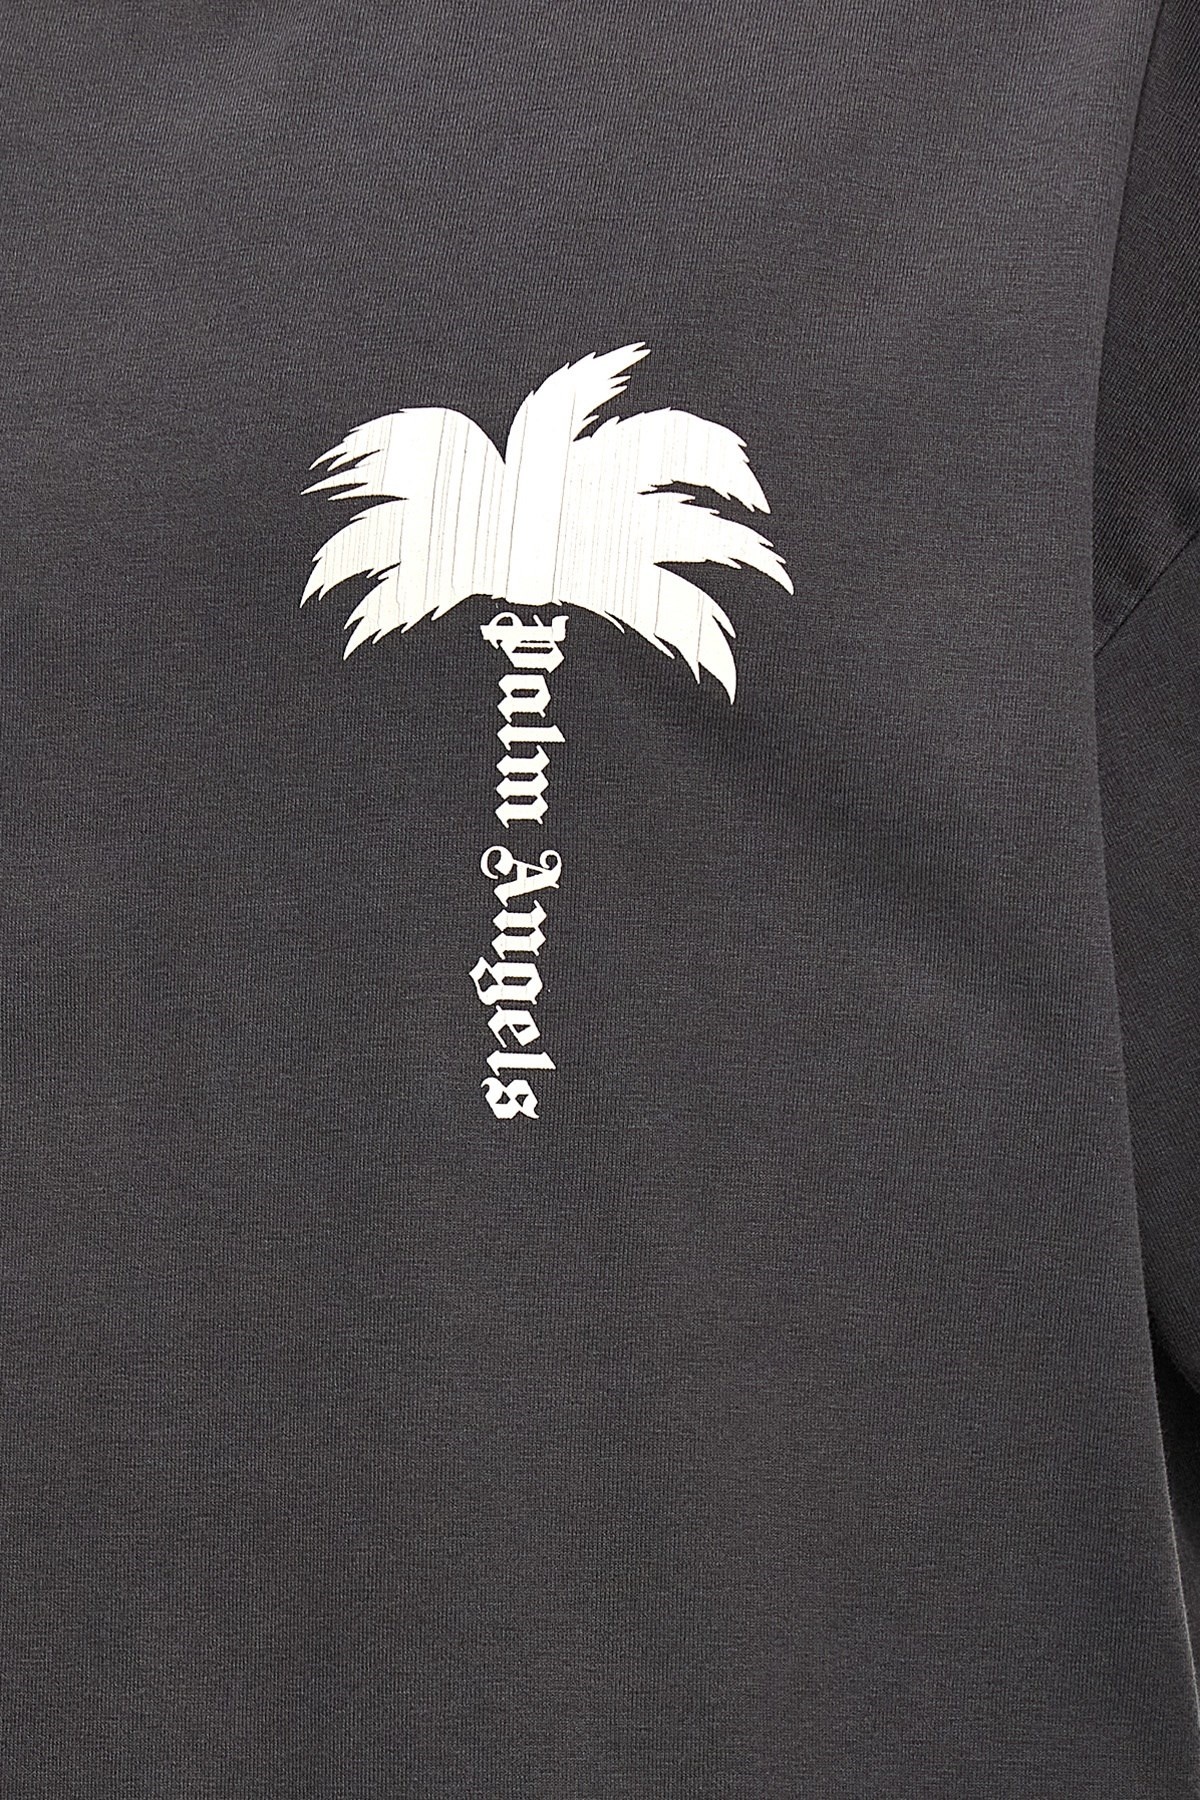 'The Palm' t-shirt - 4